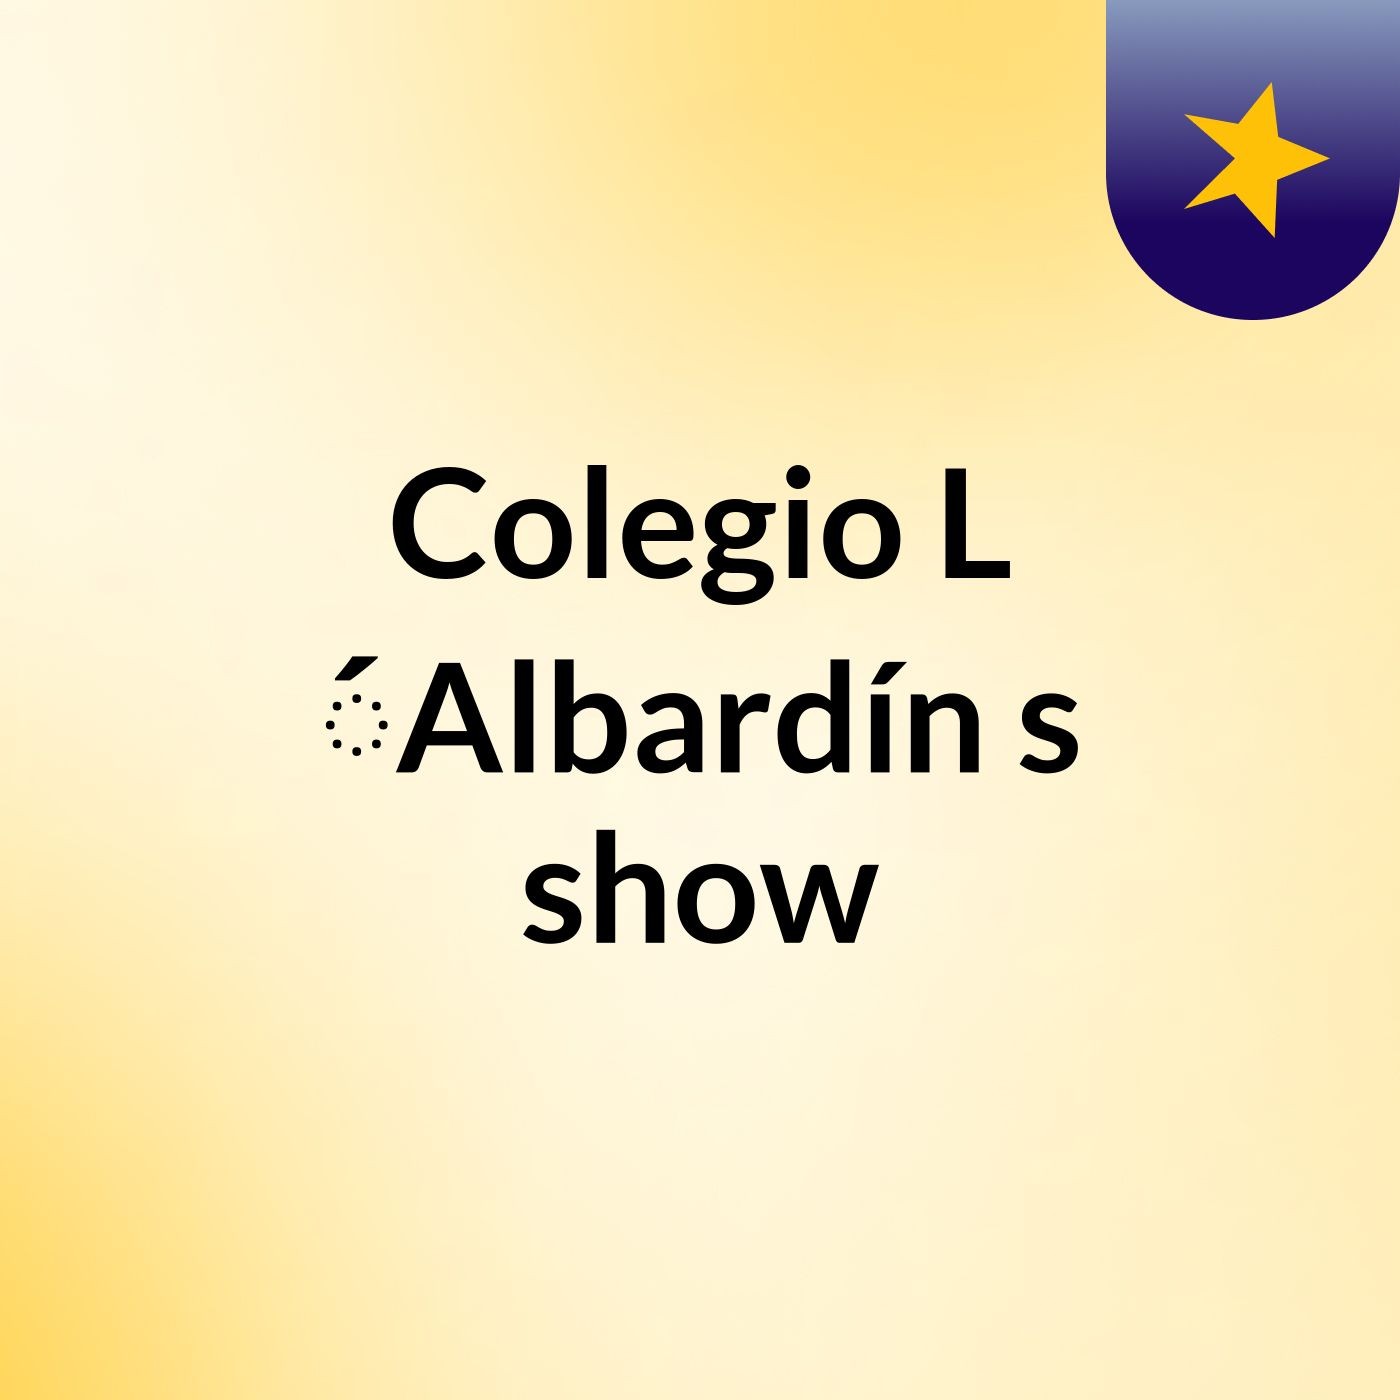 Colegio L ́Albardín's show